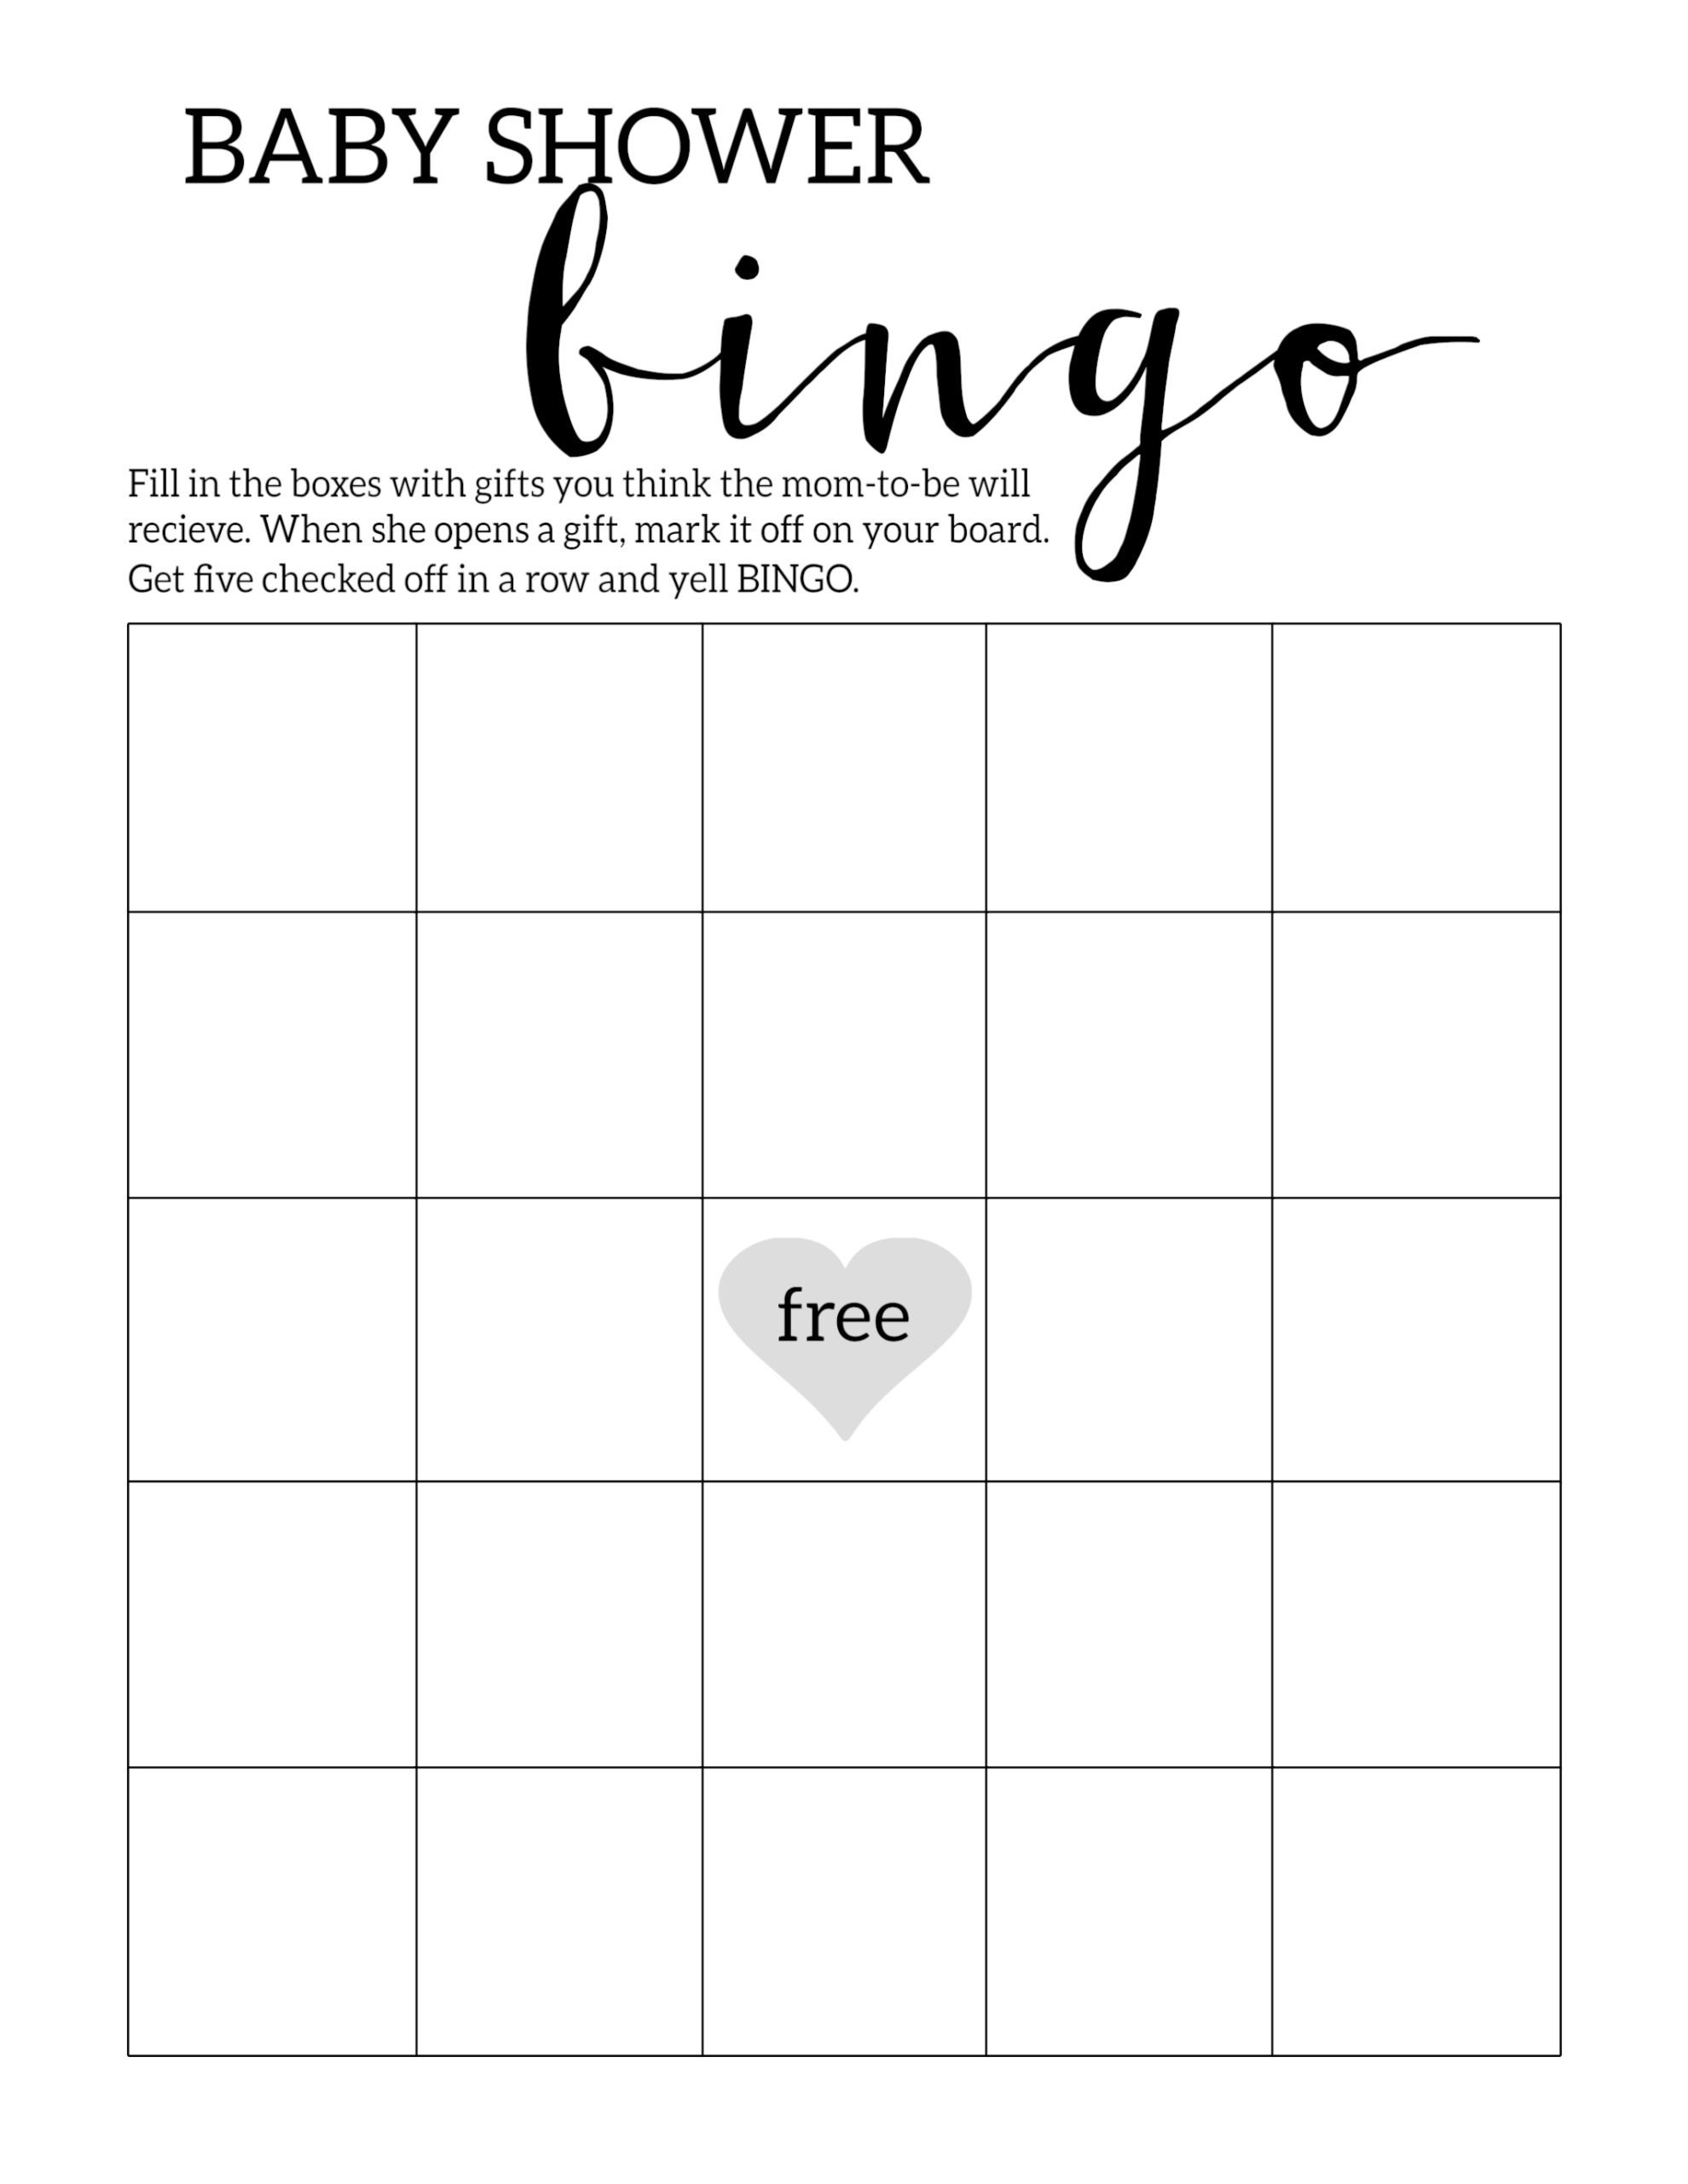 Baby Shower Bingo Printable Cards Template - Paper Trail Design - Printable Baby Shower Bingo Games Free